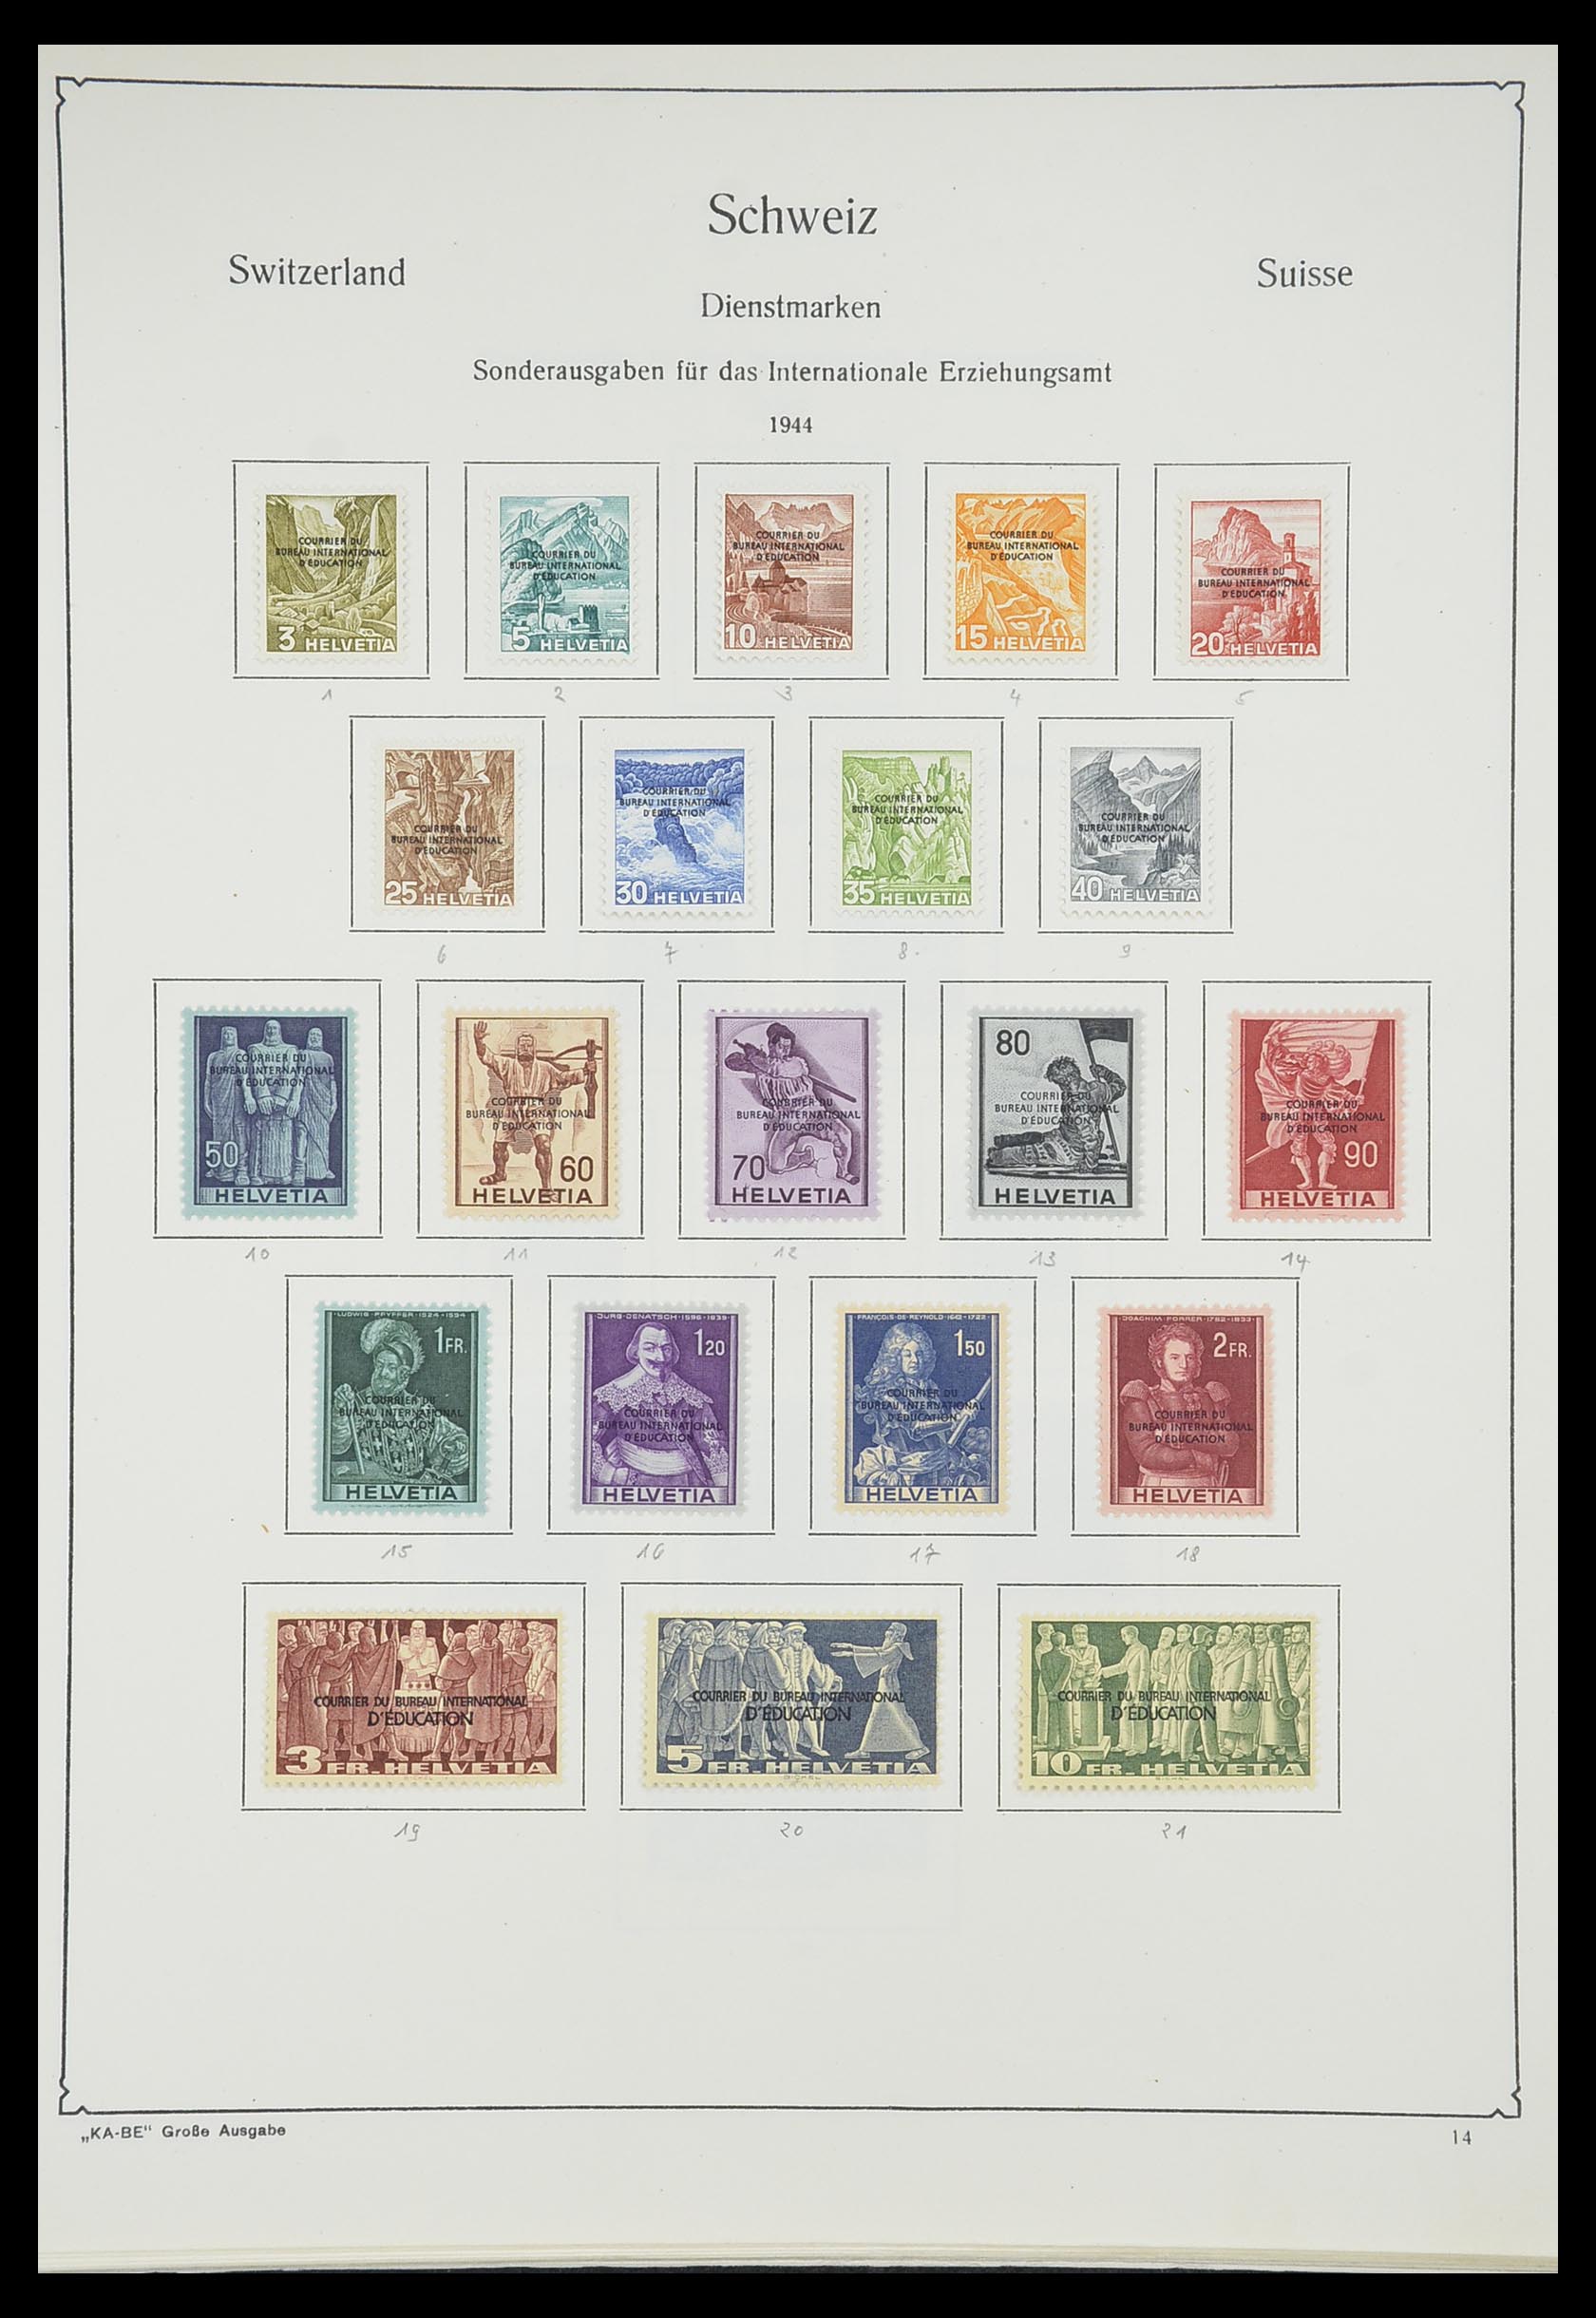 33327 015 - Stamp collection 33327 Switzerland service 1922-1989.